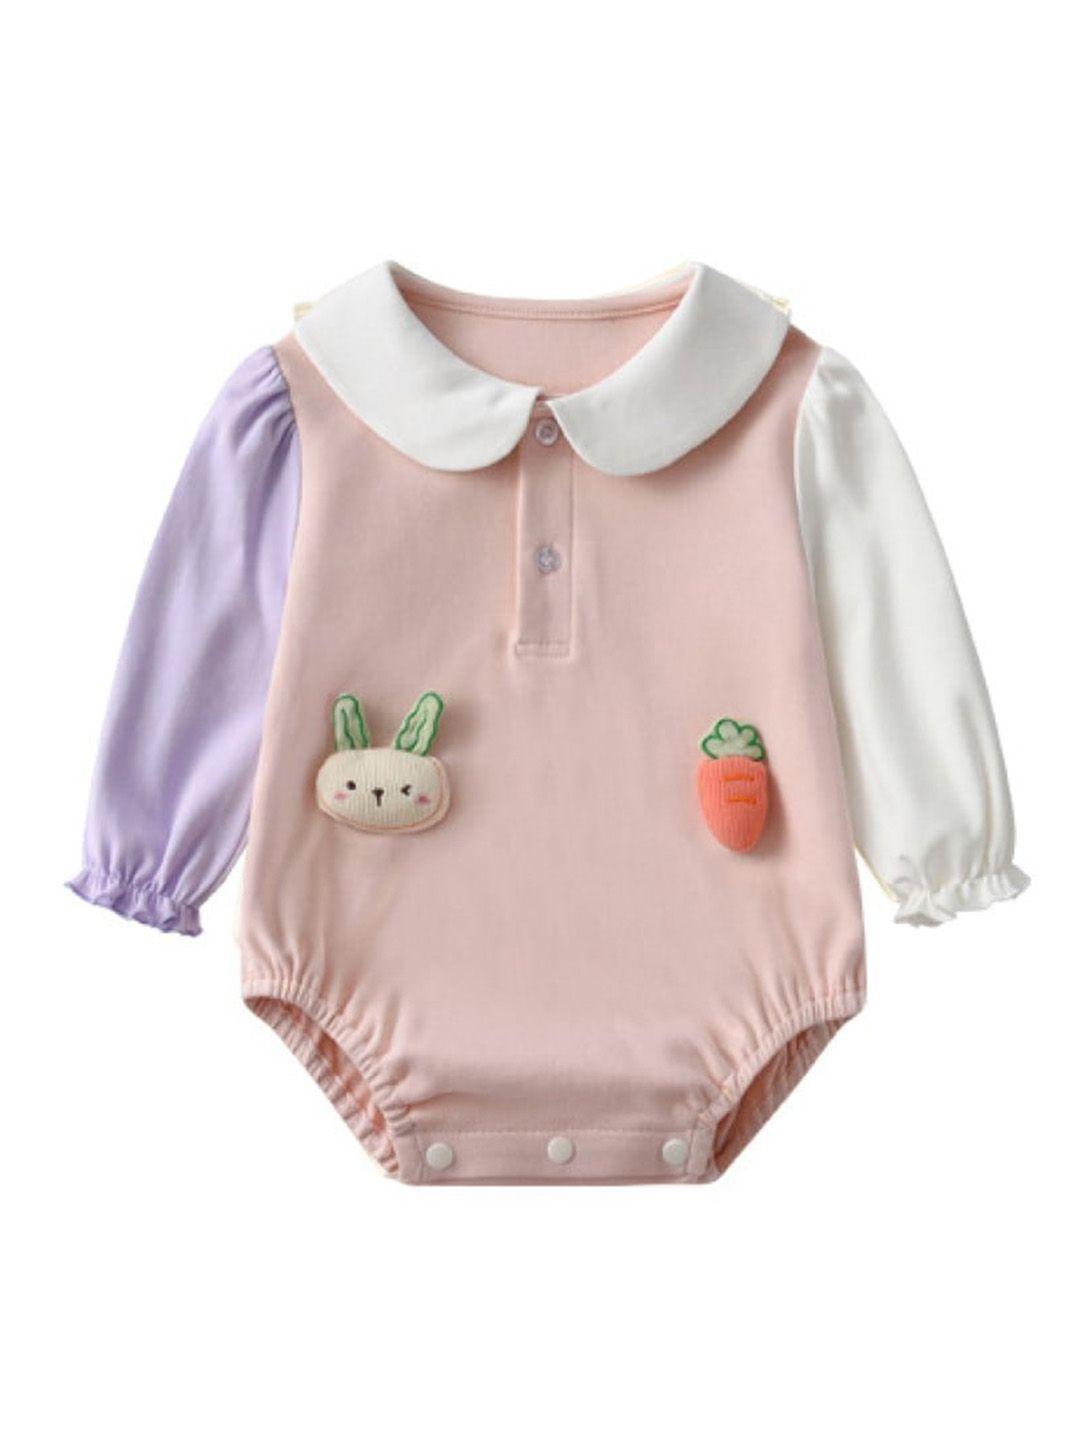 stylecast-pink-infants-girls-self-design-cotton-romper